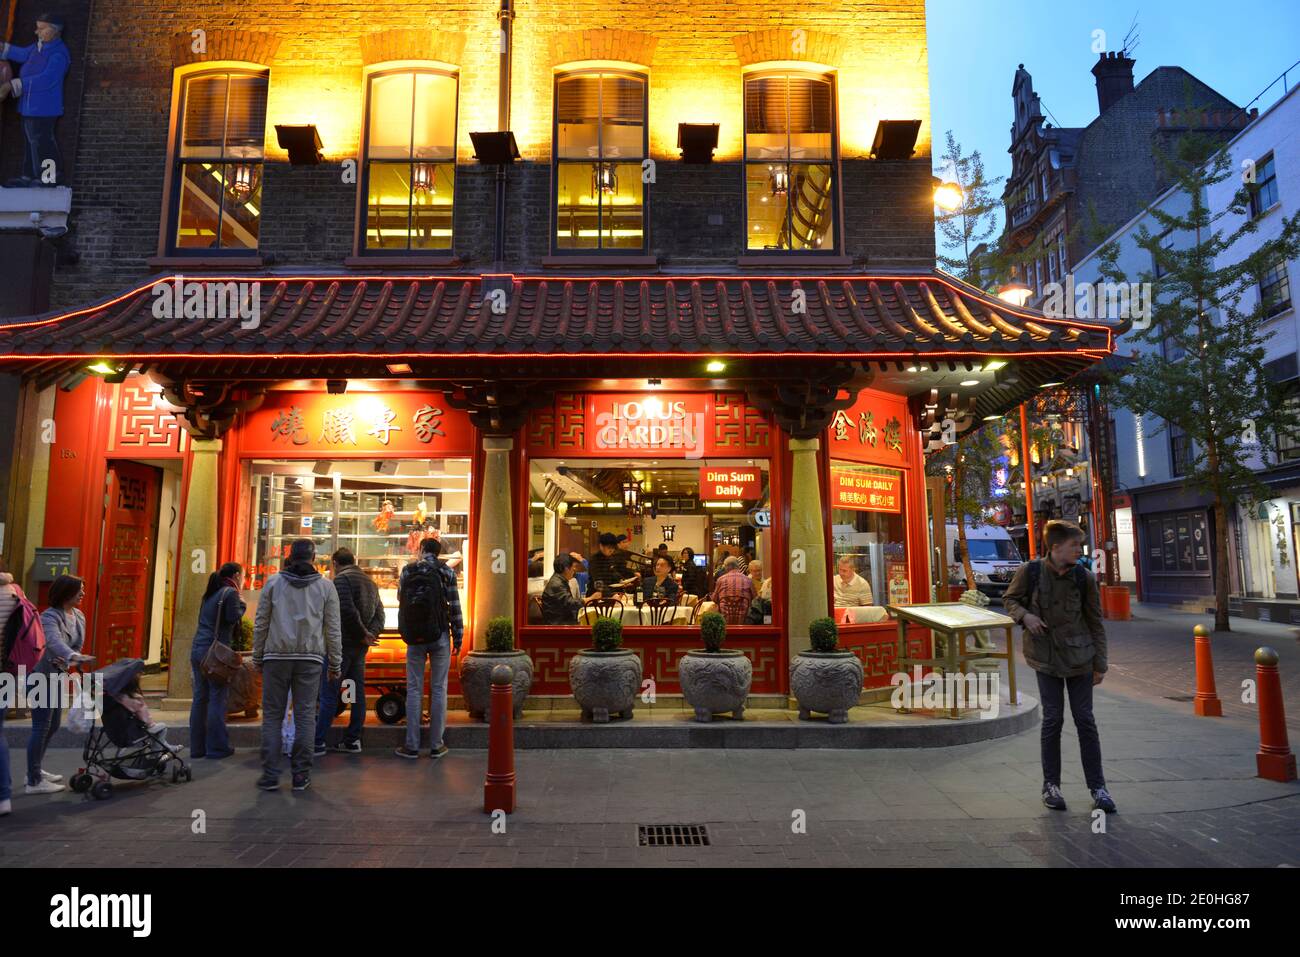 Il ristorante Lotus Garden, Gerrard St, Chinatown, Soho, Londra, Inghilterra, Grossbritannien Foto Stock